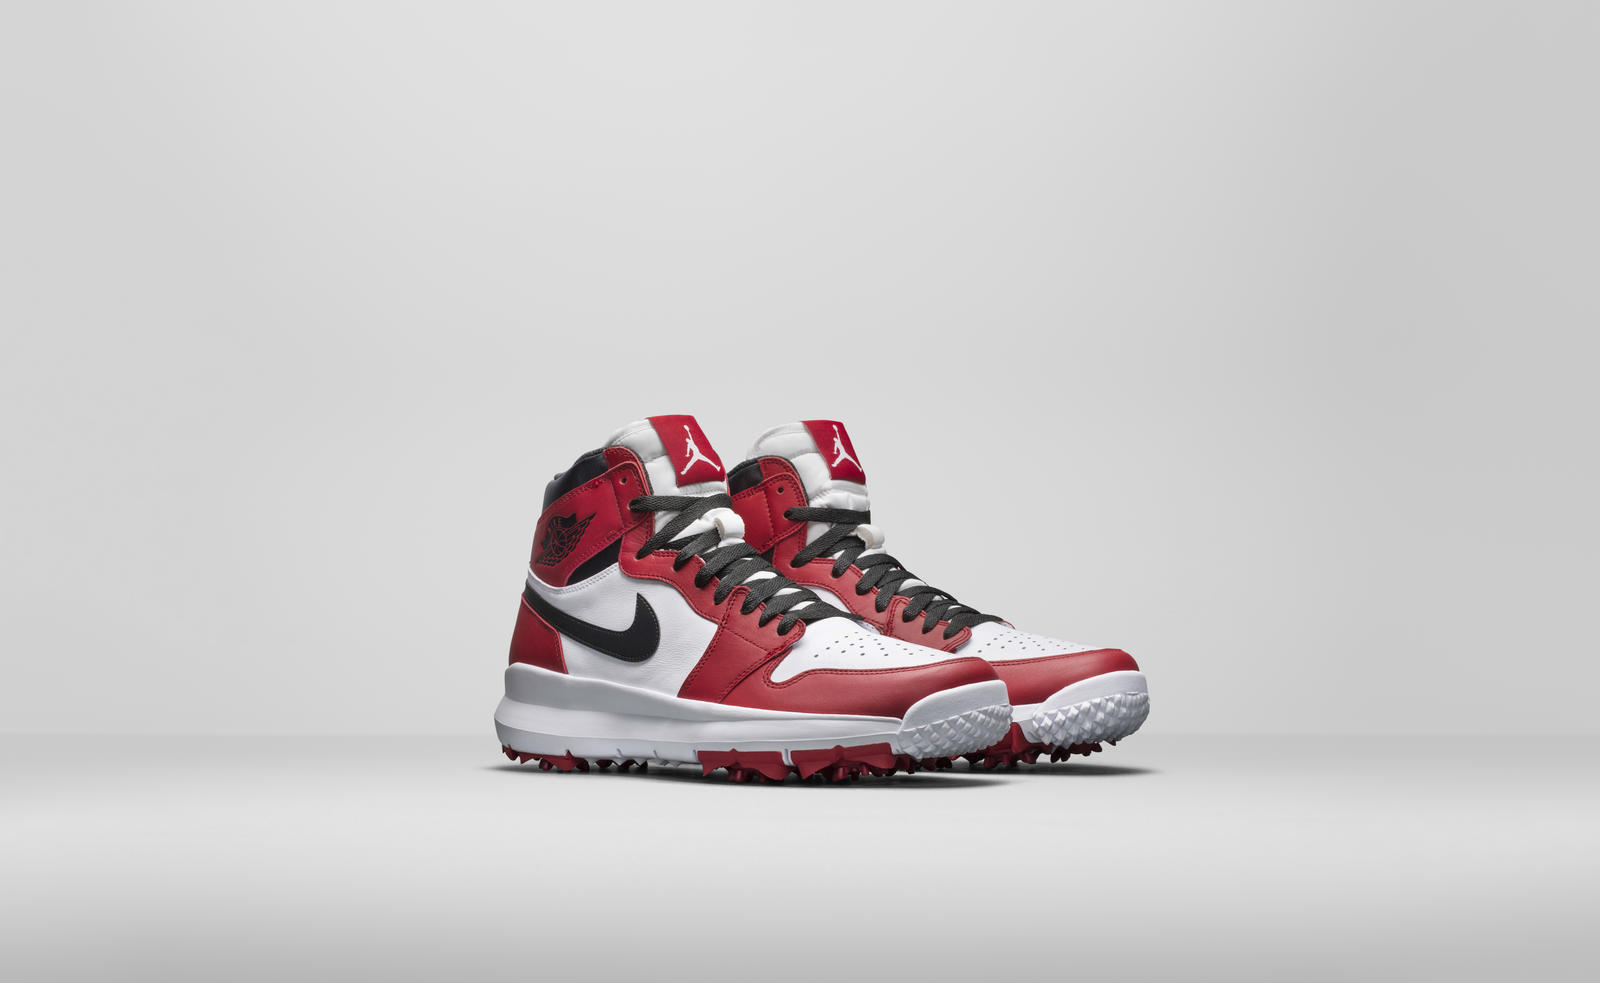 Air Jordan 1 Golf Shoe is Releasing on February 10th | Nice Kicks